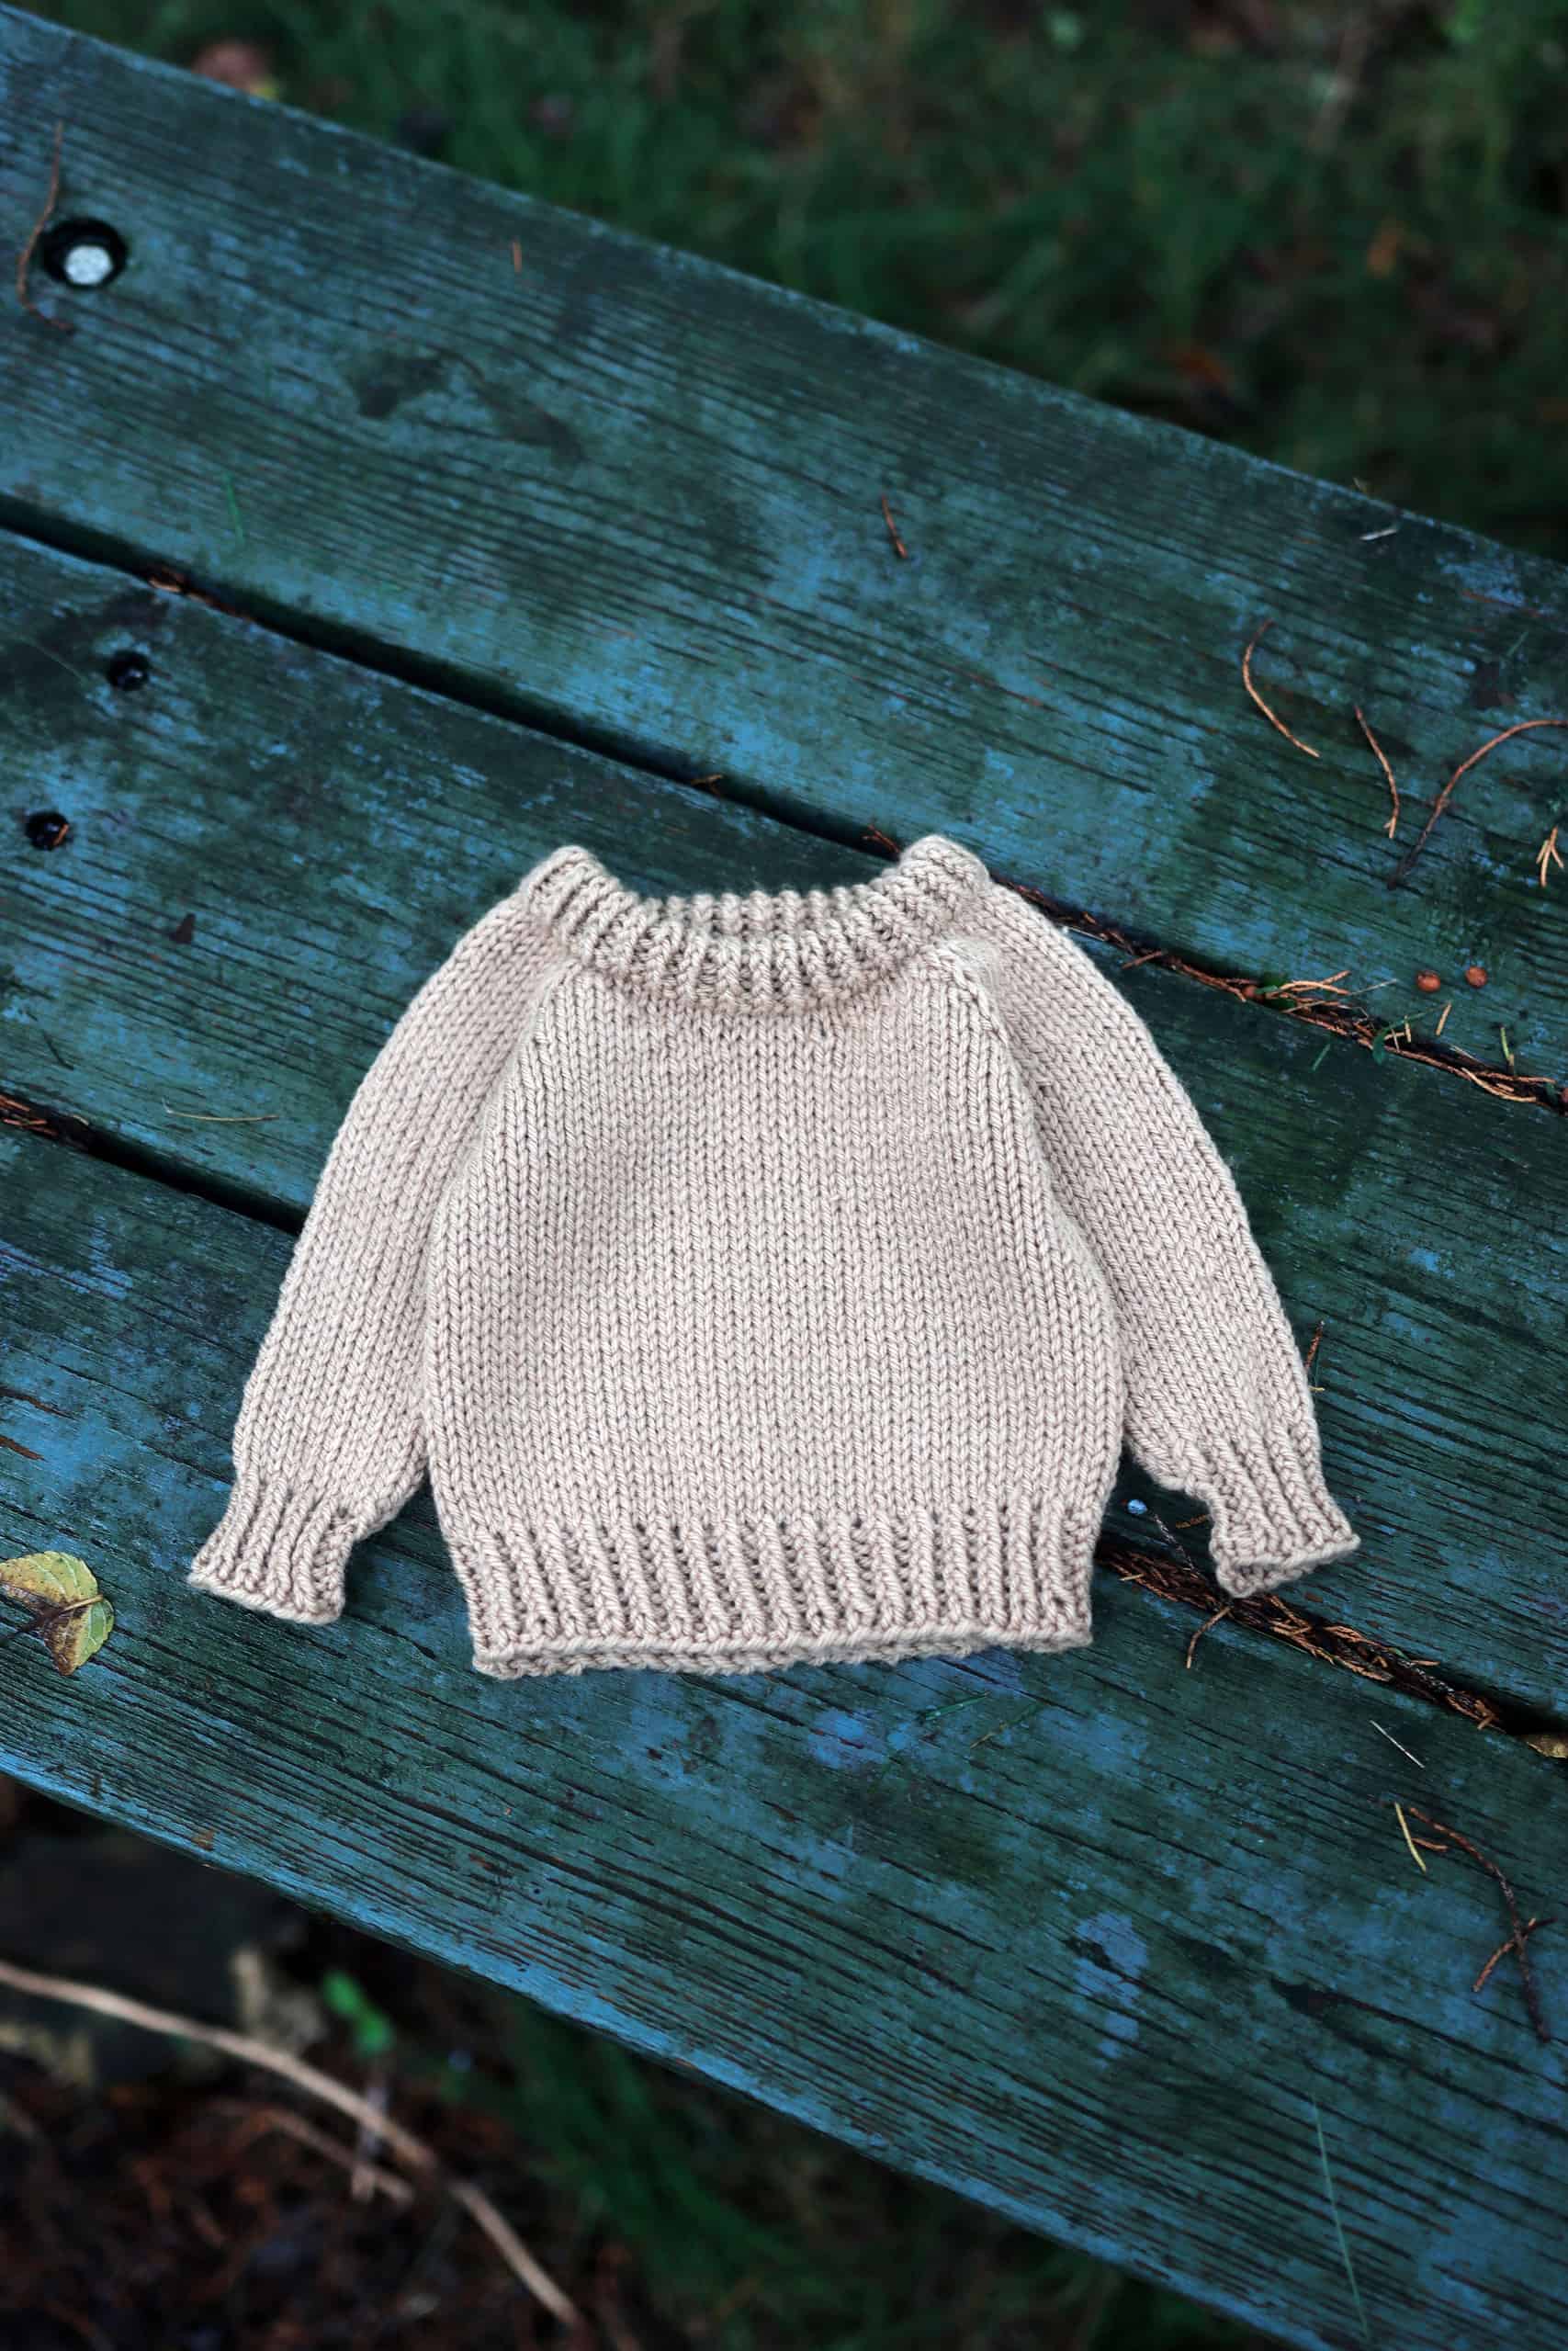 The Baby Sweater Knitting Pattern